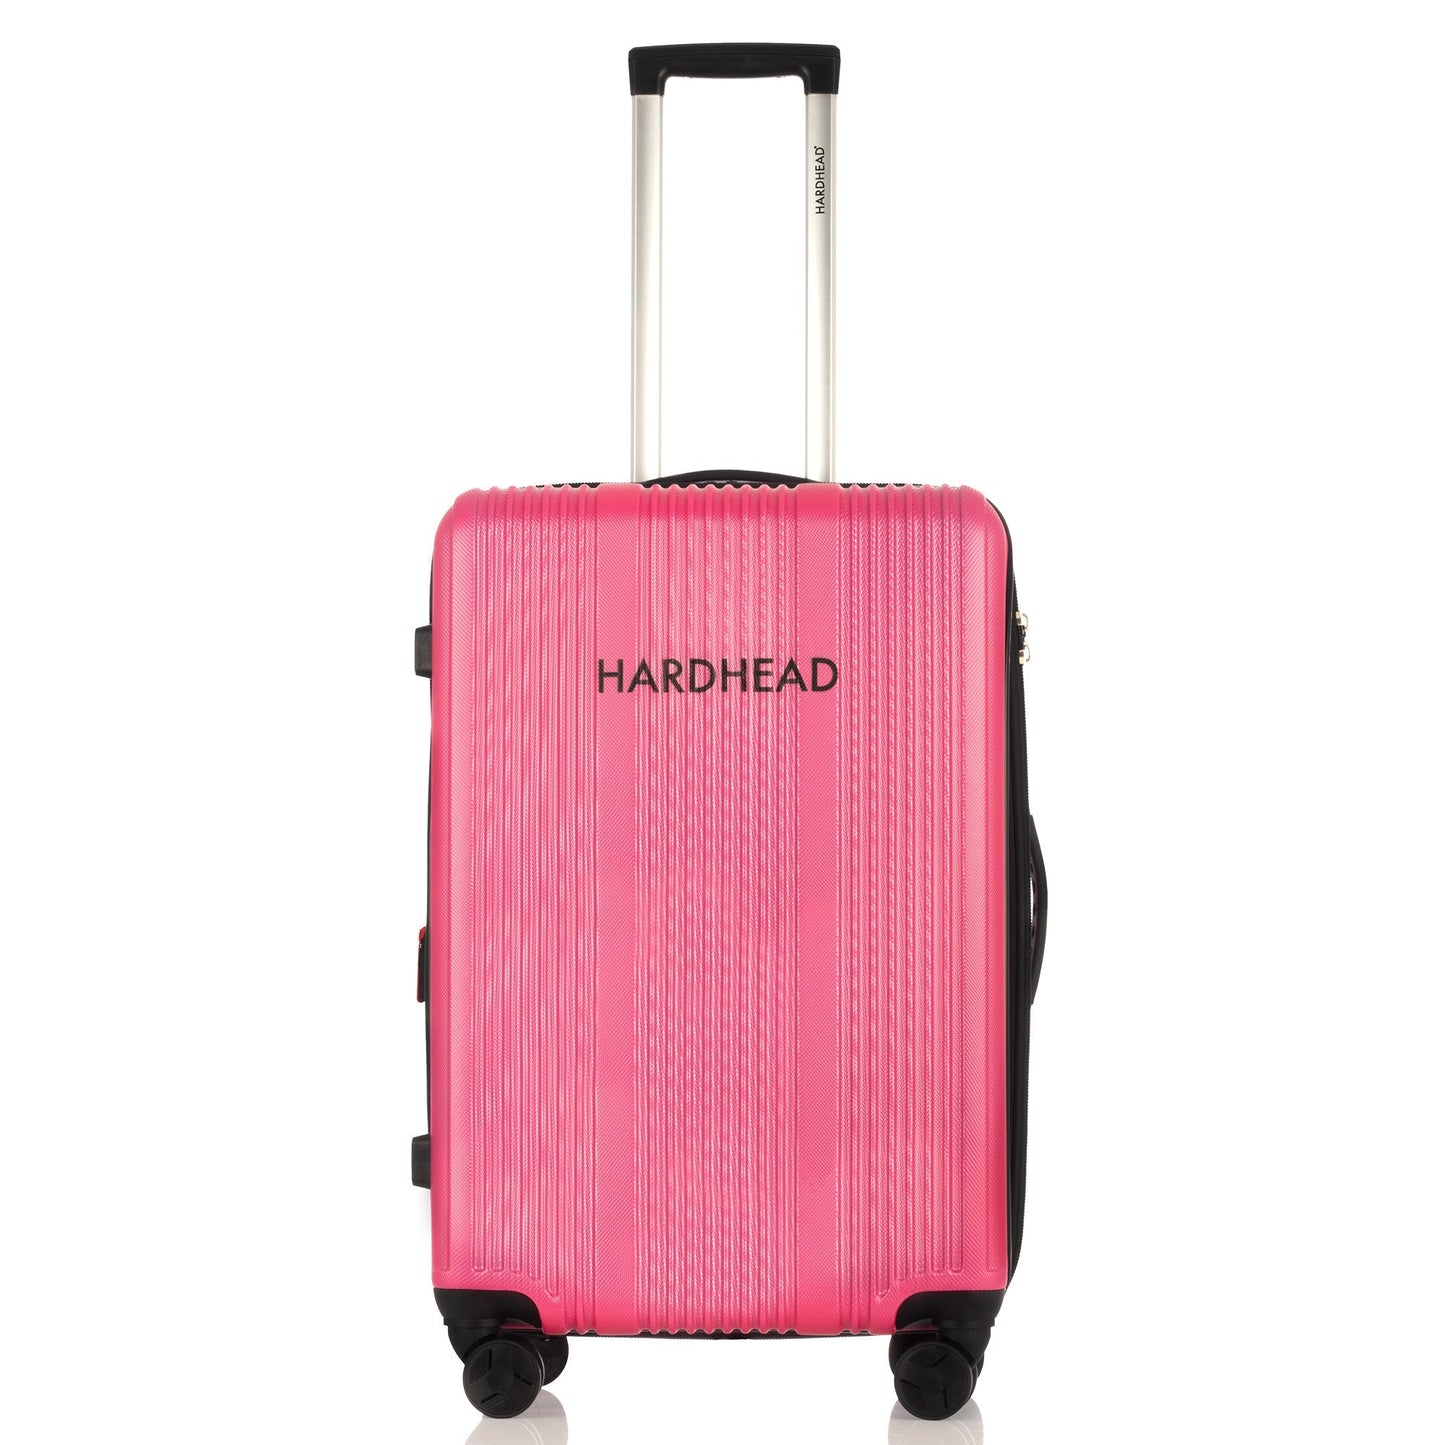 Nayax Collection Pink Luggage (20/24/28") Suitcase Lock Spinner Hardshell